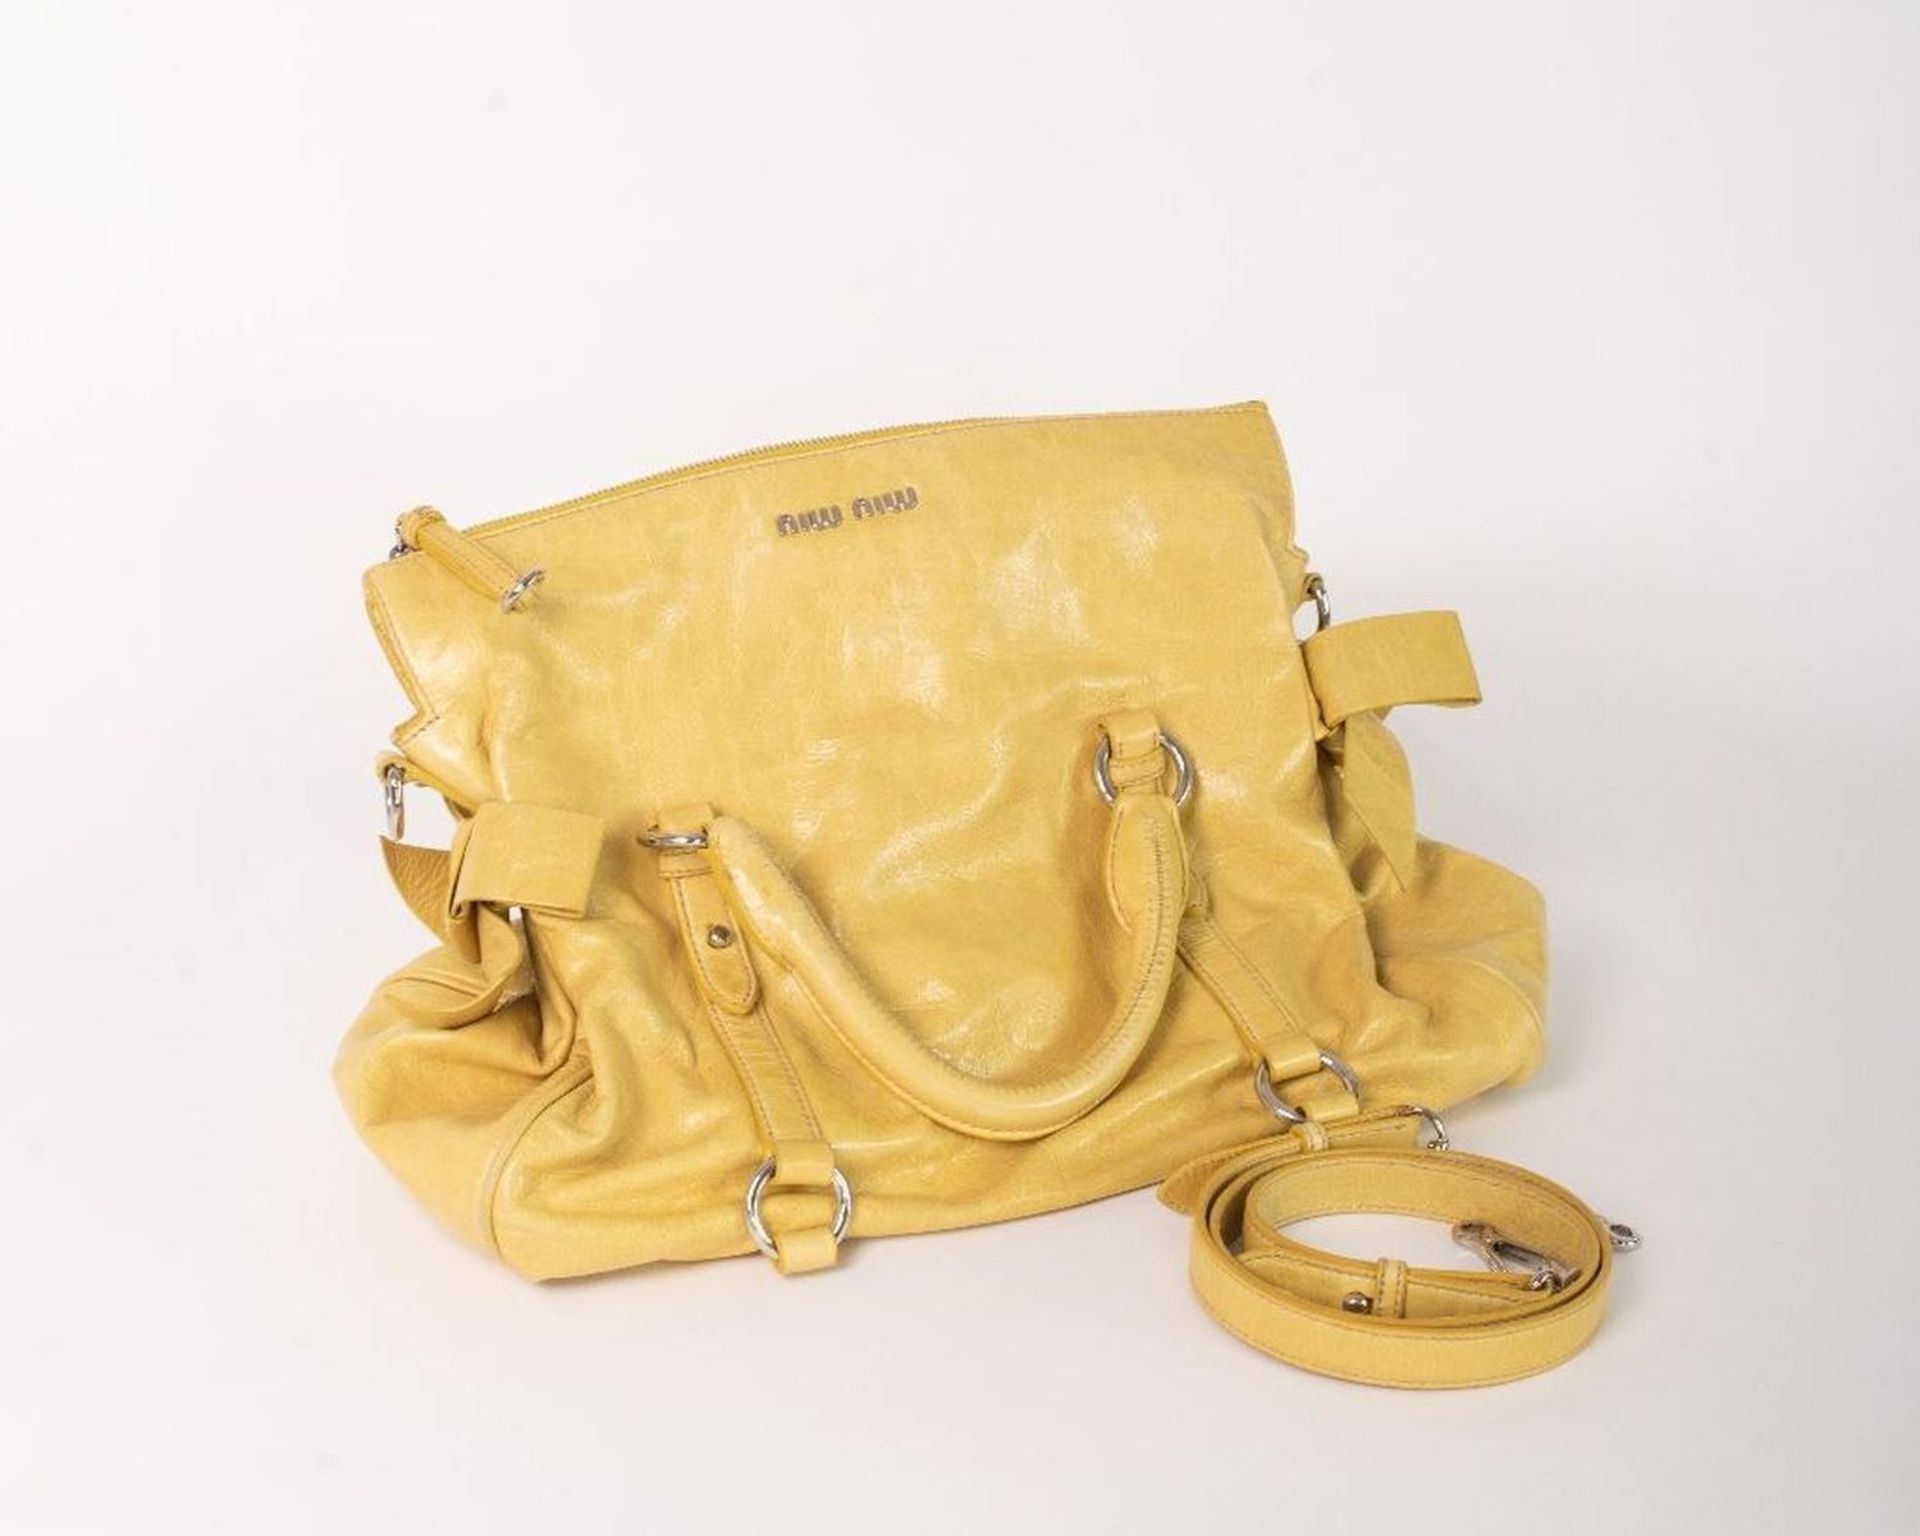 Miu Miu Vitello Lux Yellow Leather Handbag - Image 12 of 23